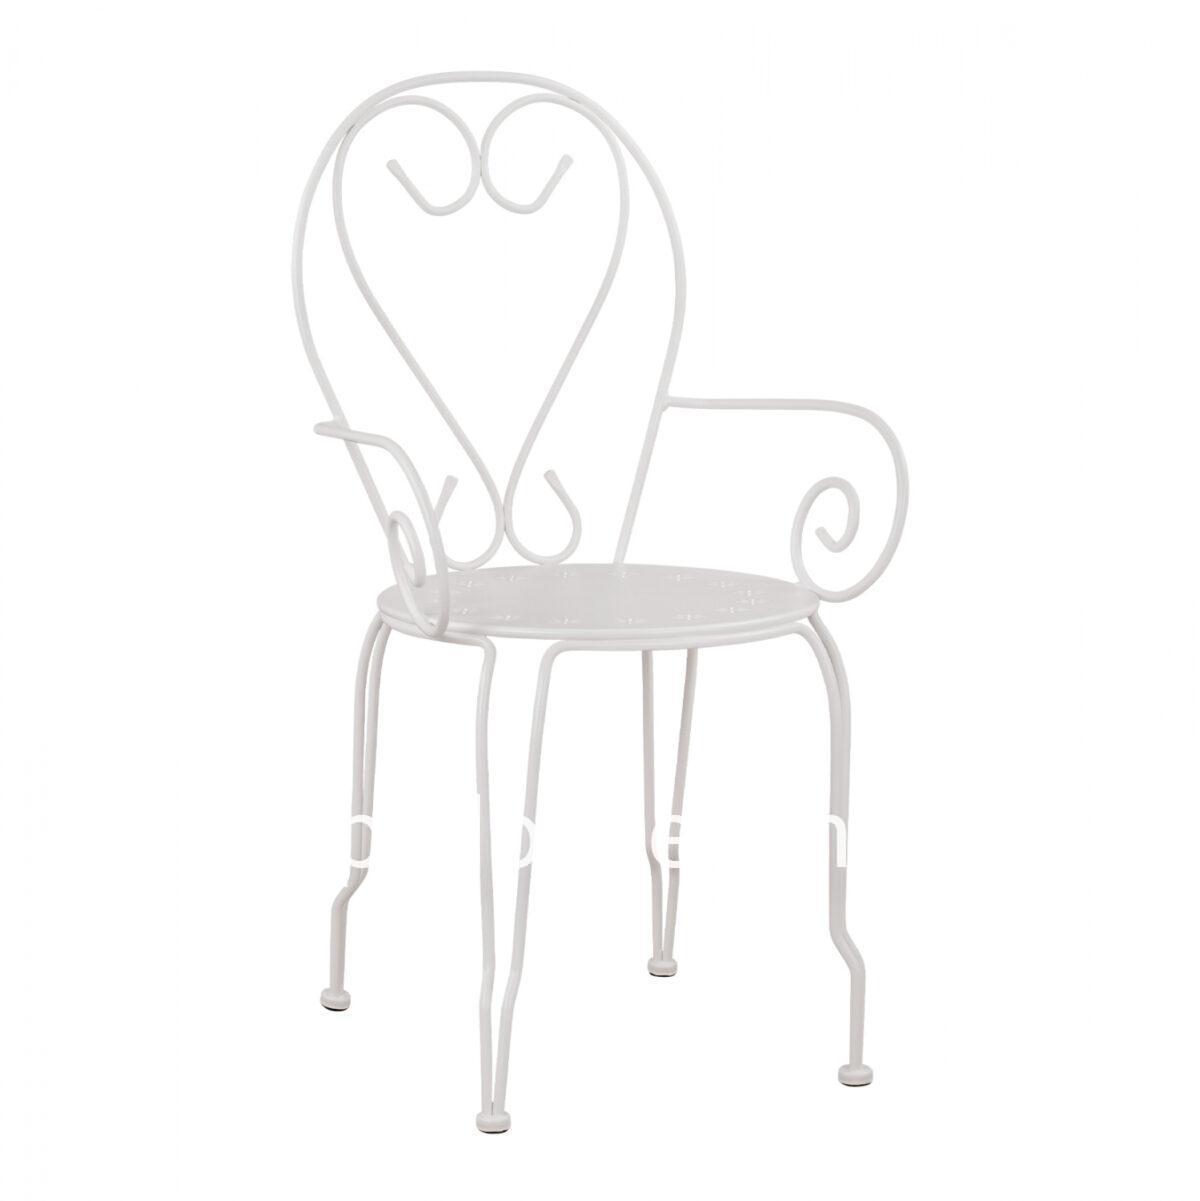 Metallic armchair Amore White HM5008.12 49x48x90 cm